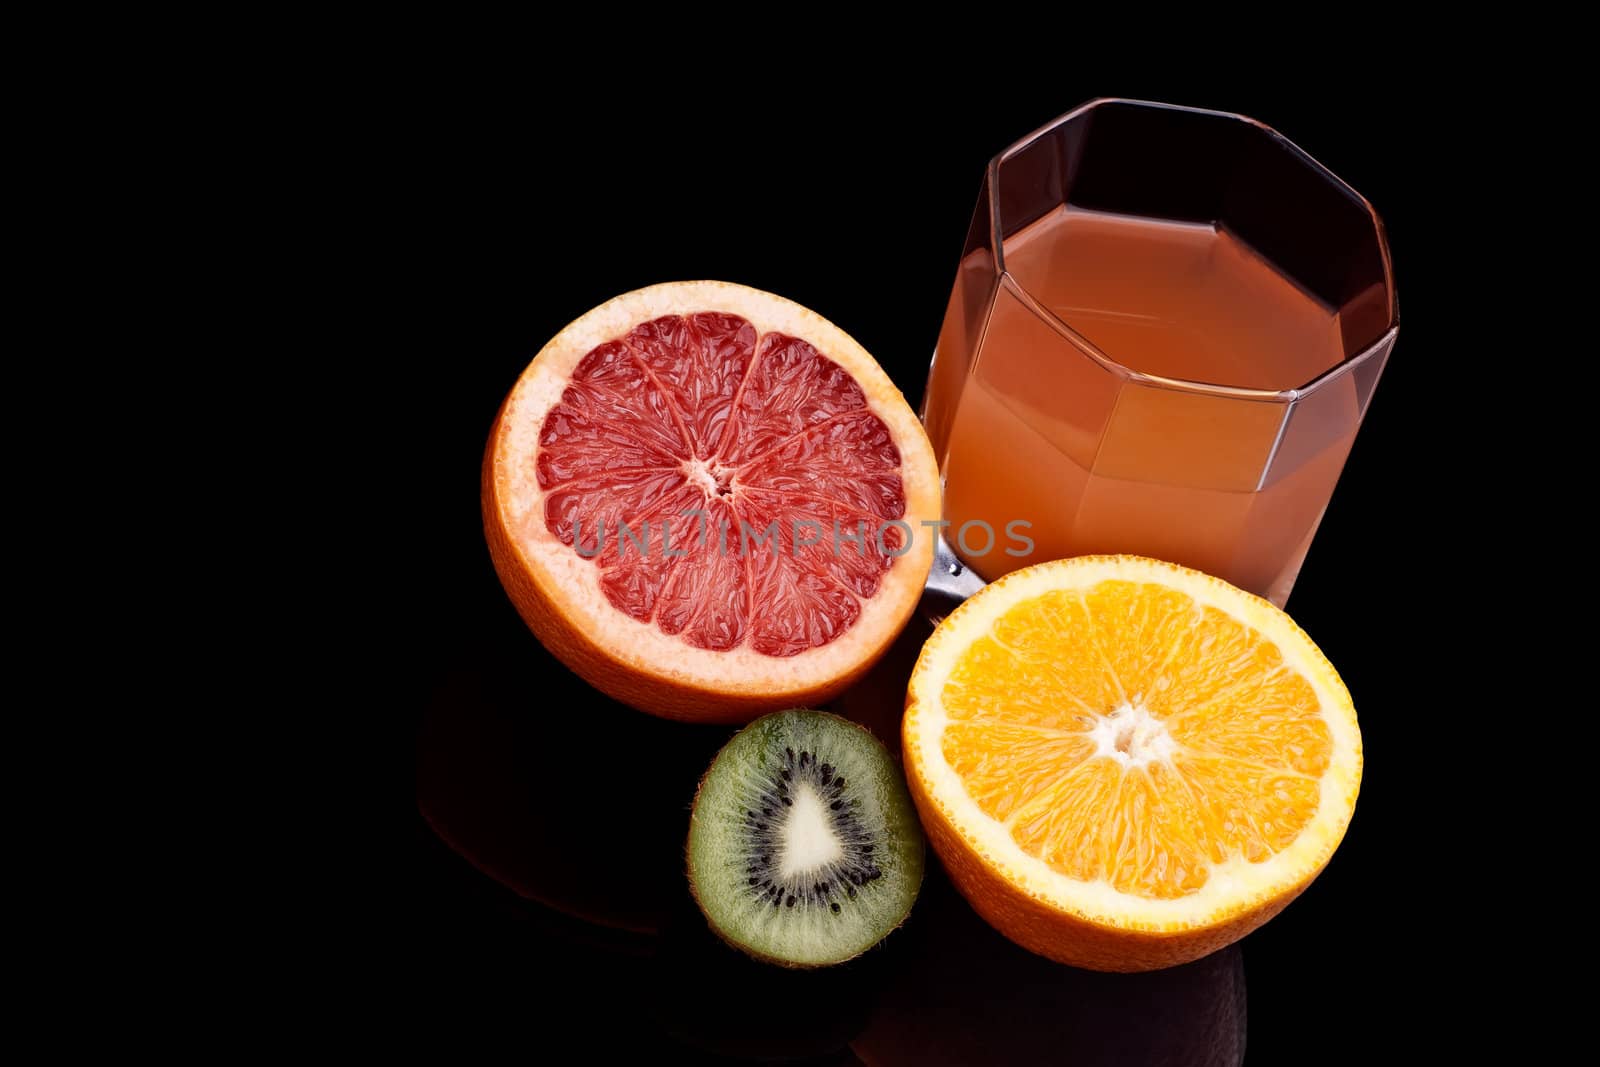 Glass of Grapefruit and orange juice on the black background